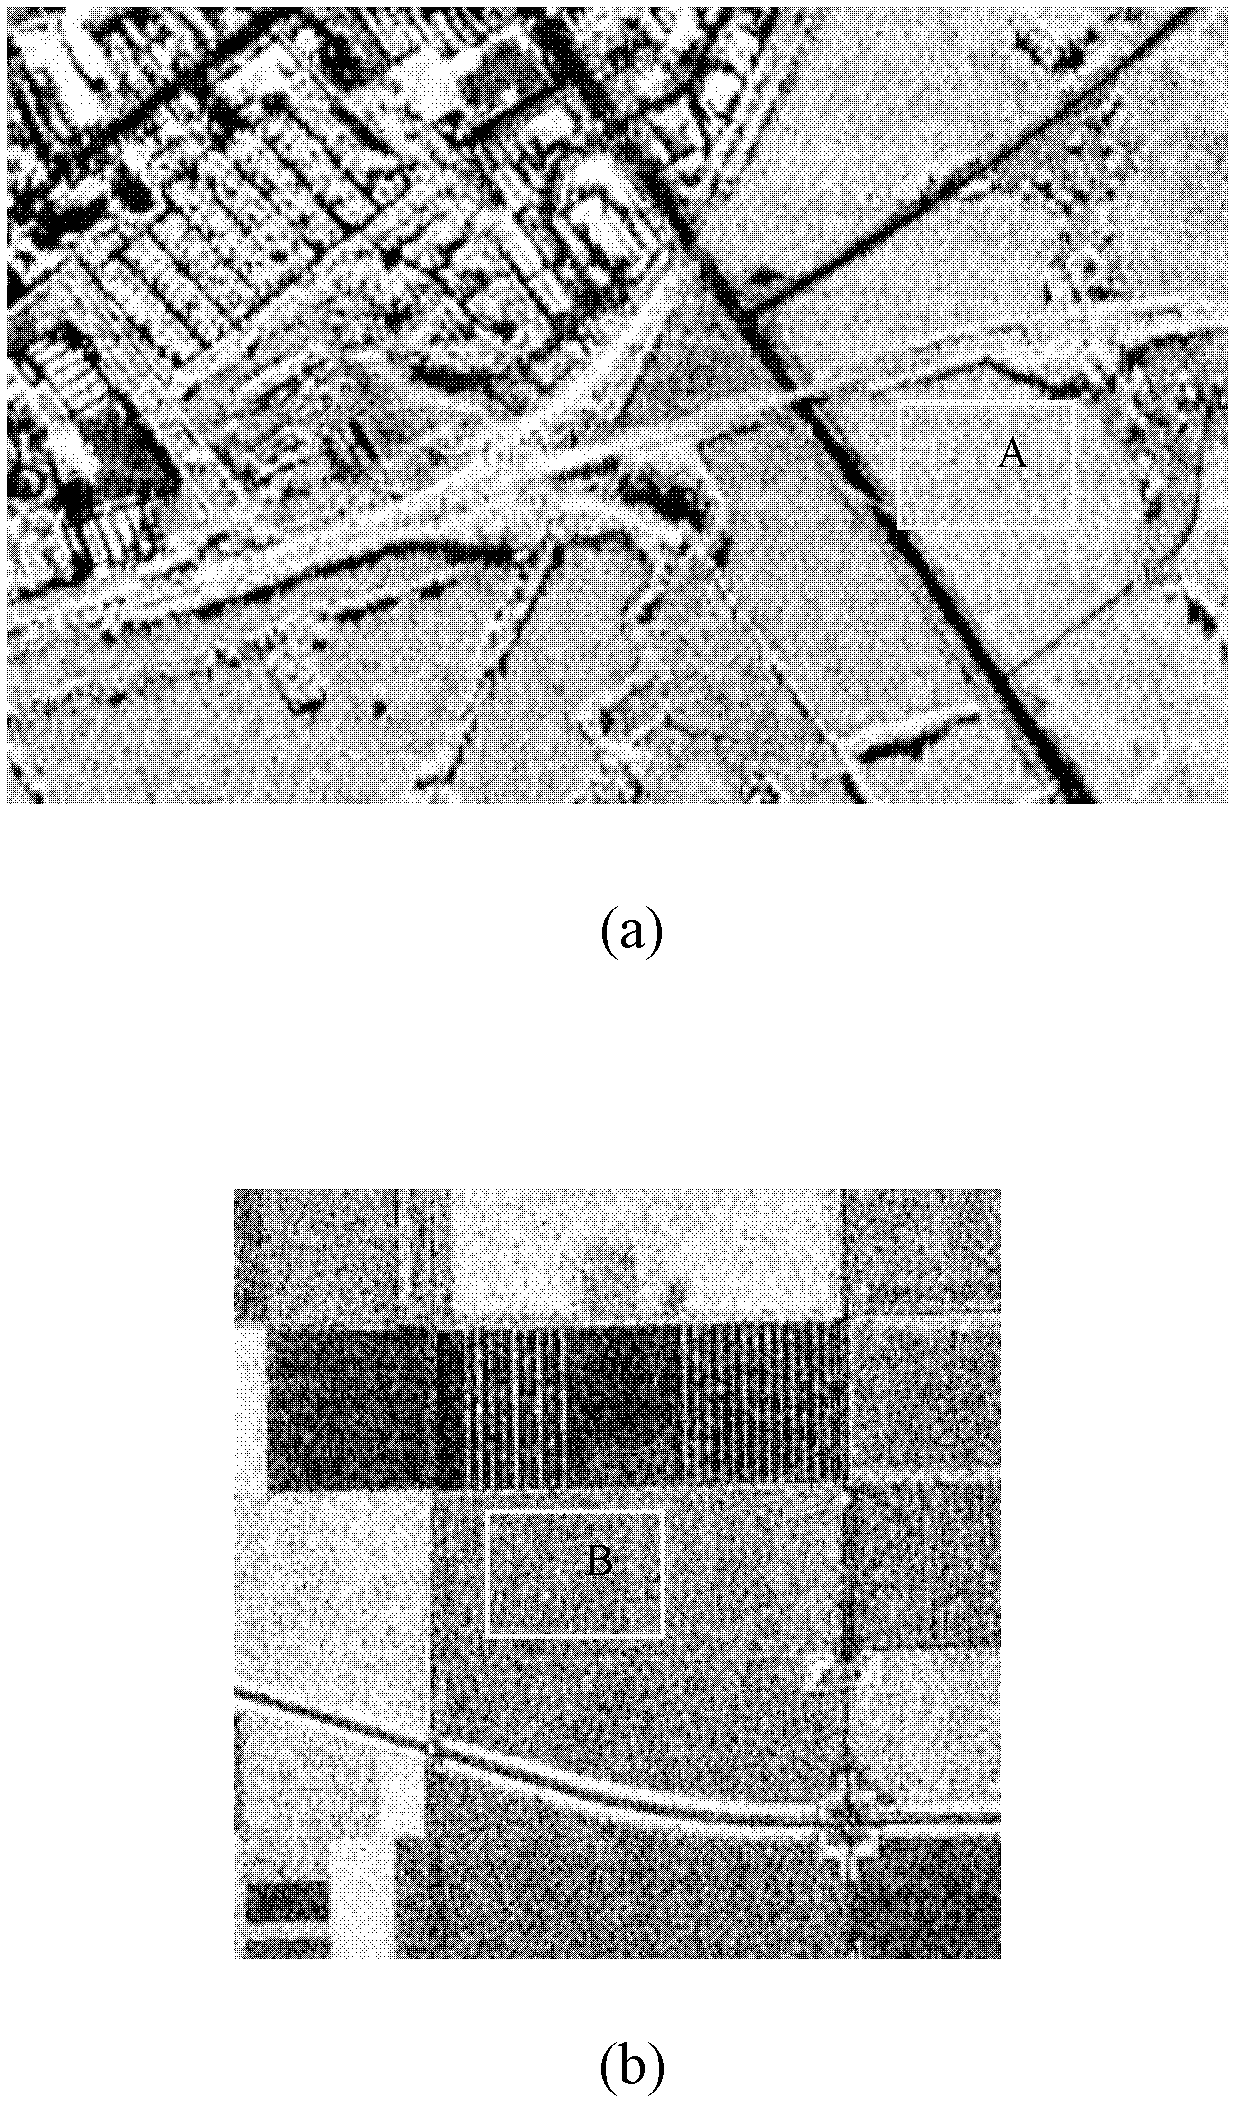 Polarimetric SAR (synthetic aperture radar) data speckle suppression method based on adaptive shape non-local means